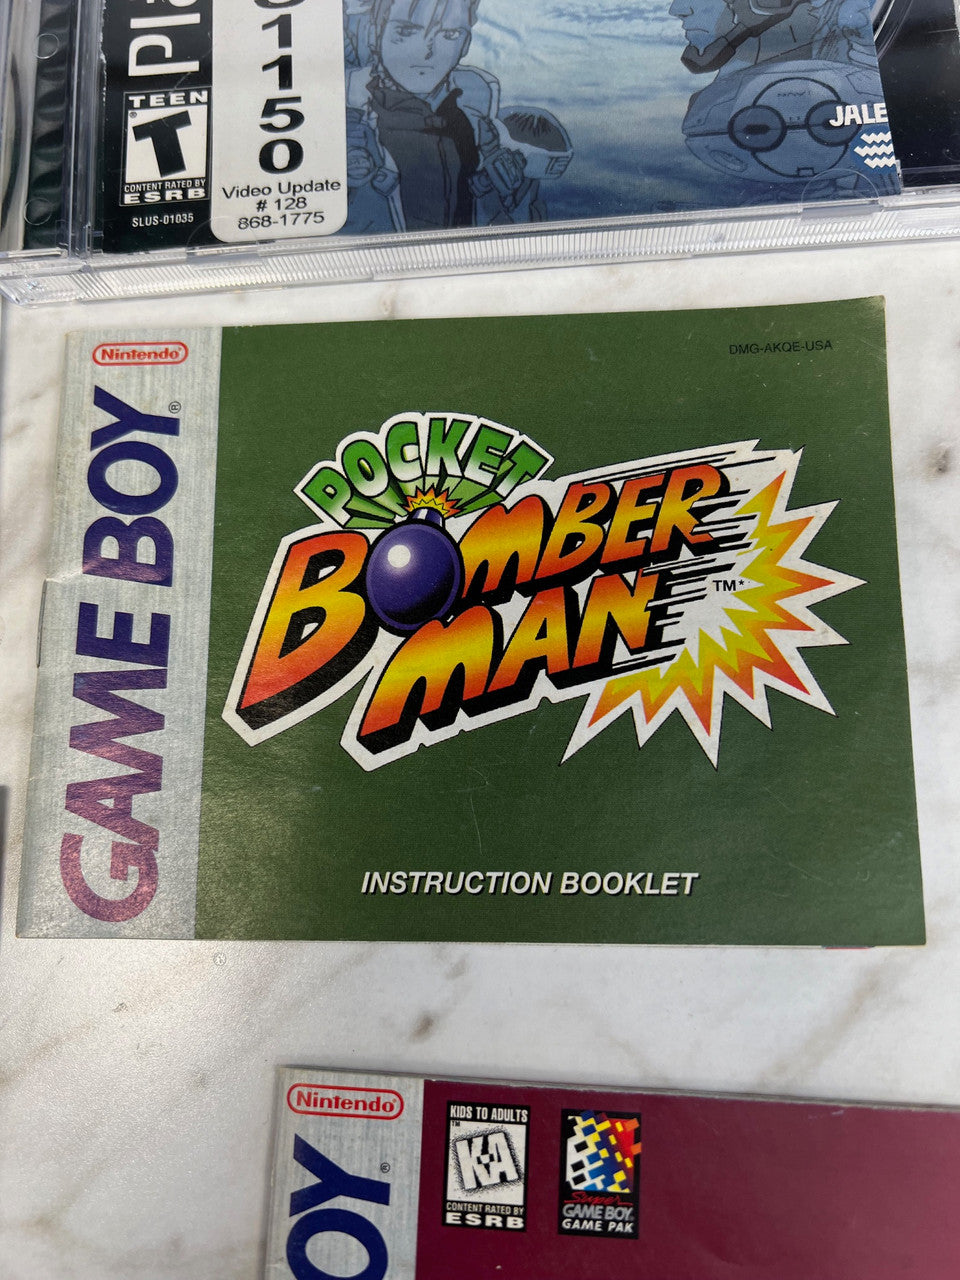 Pocket Bomber Man Game Boy manual only